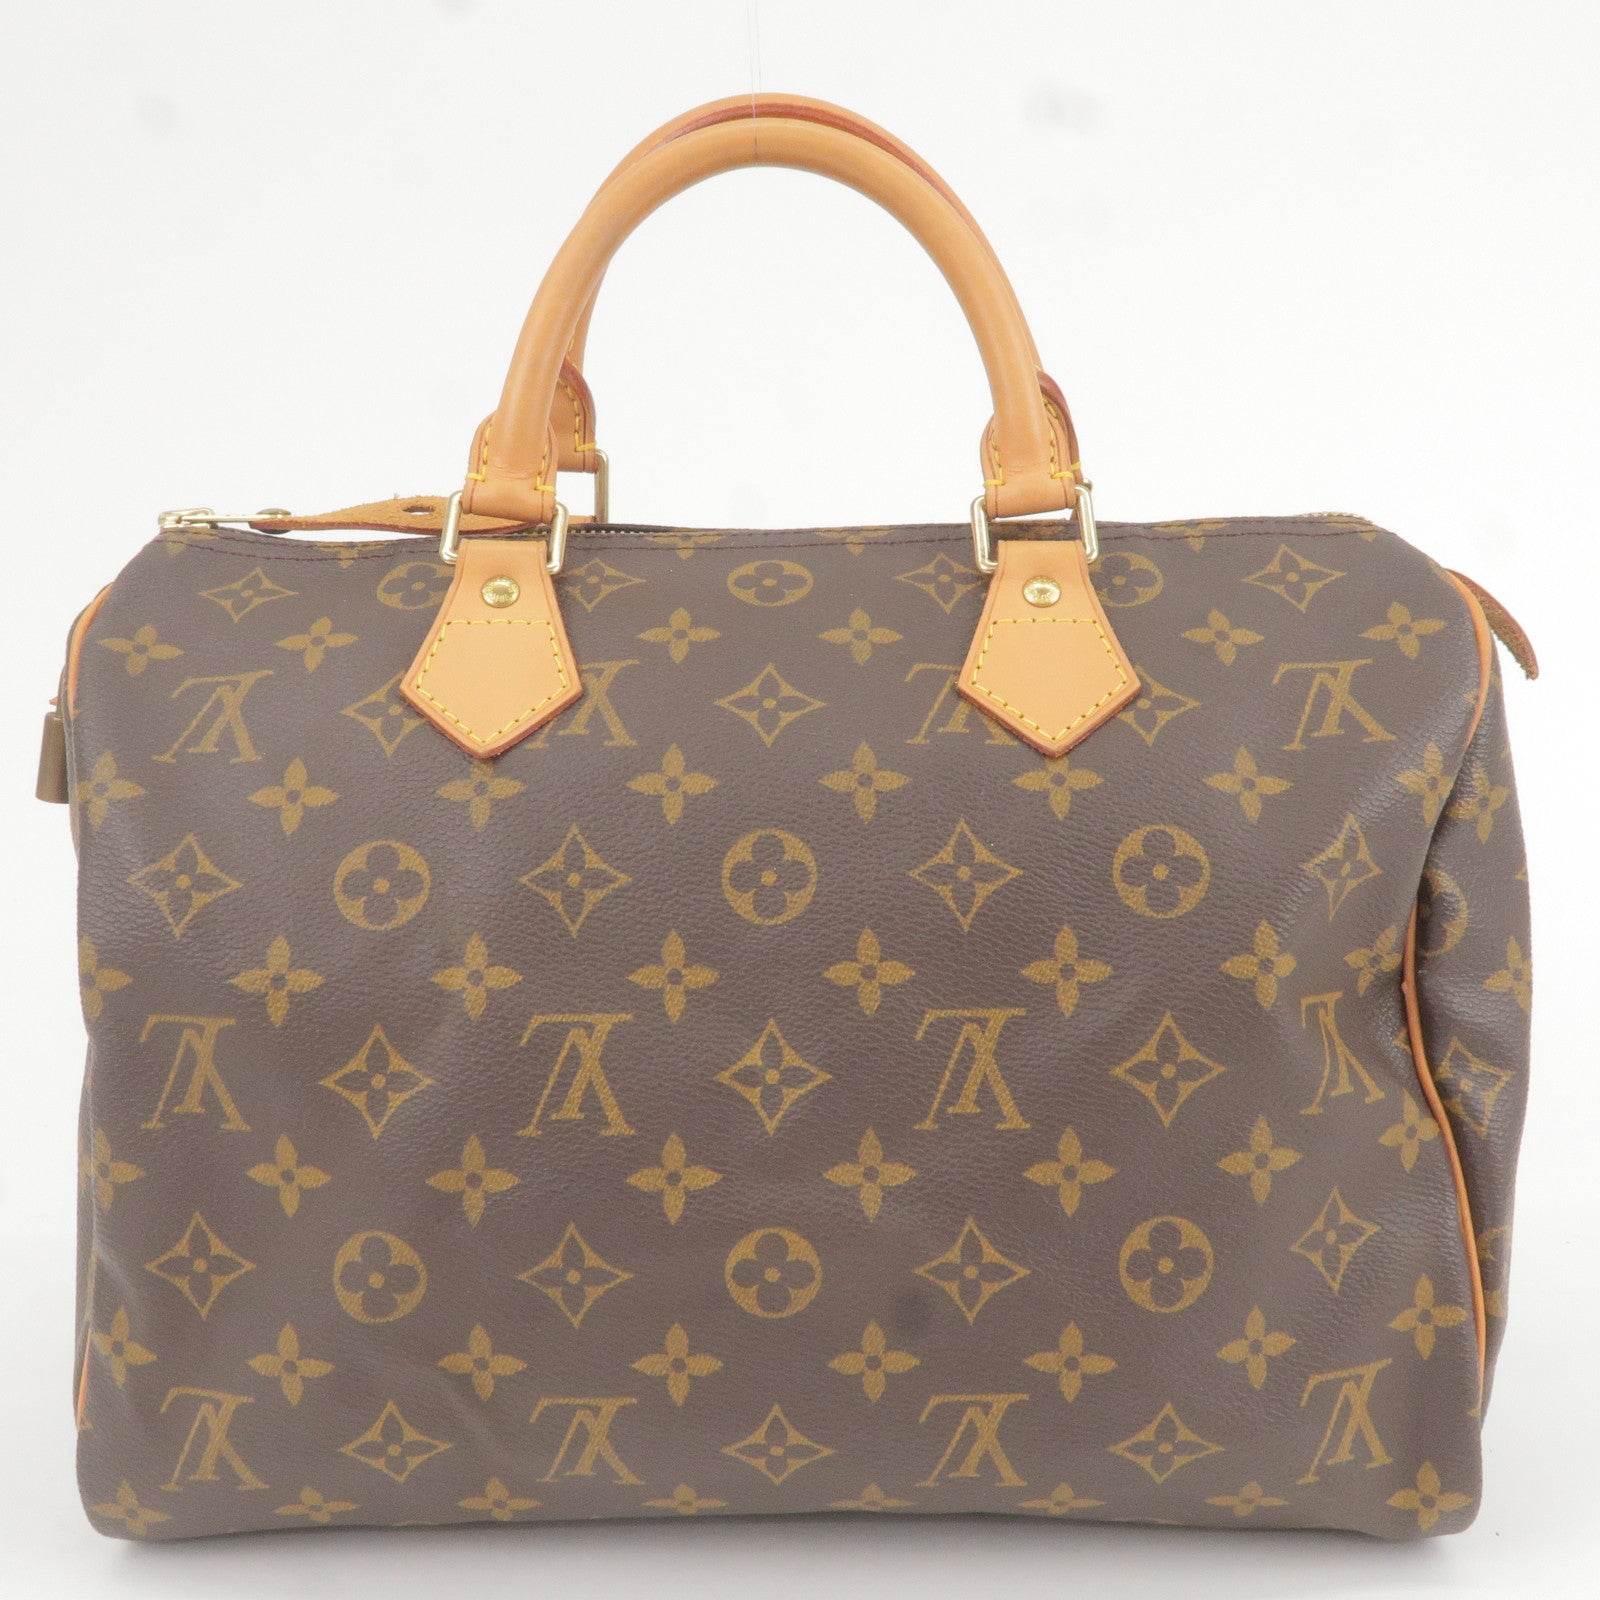 Louis Vuitton BRAND NEW - Speedy Bag 30 with custom Monogram